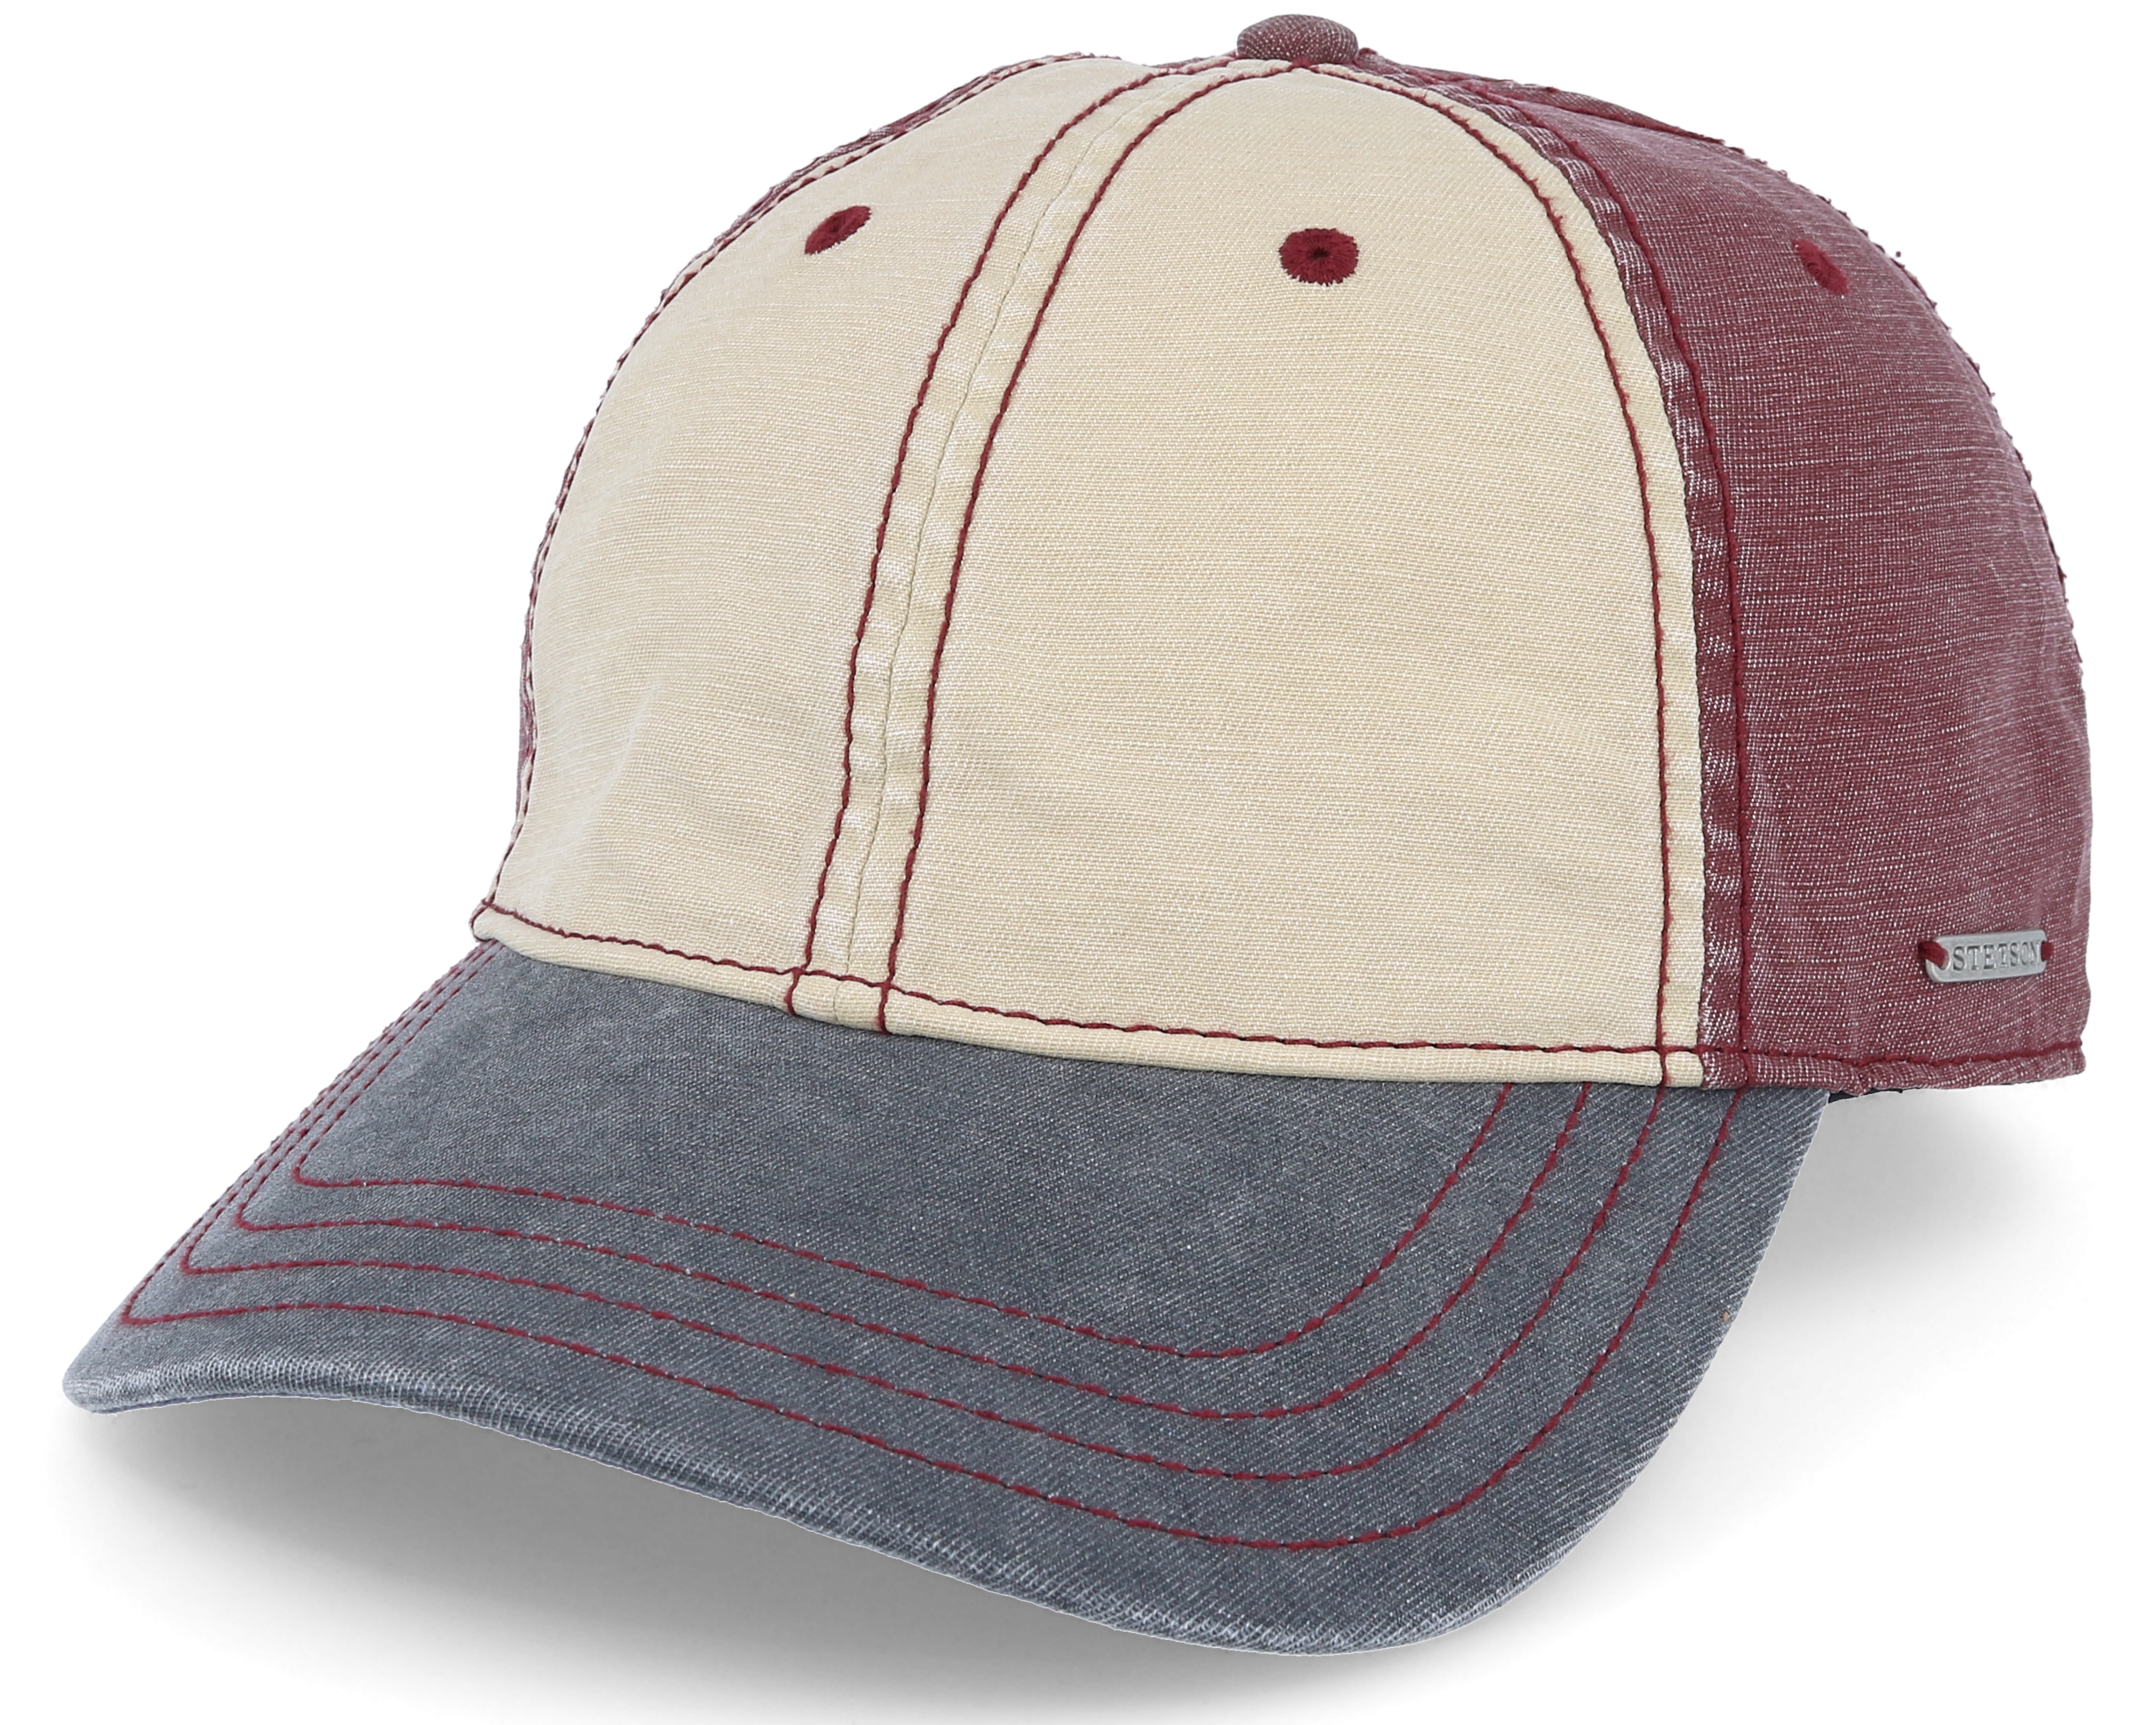 Baseball Cotton Beige/Burgundy/Navy Adjustable - Stetson caps ...